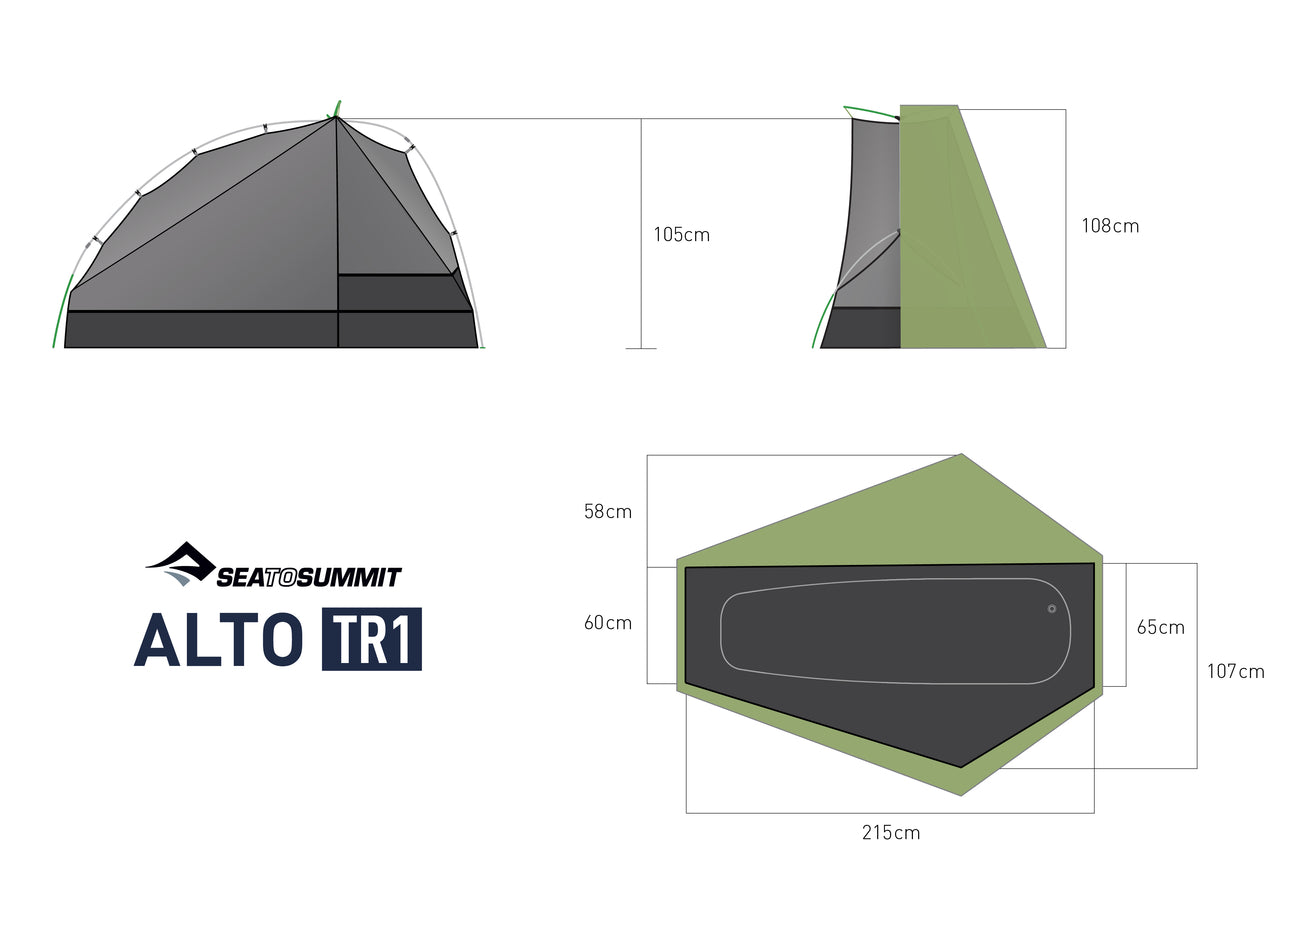 Sea to Summit Alto TR1 Review: A Fantastic Ultralight Tent